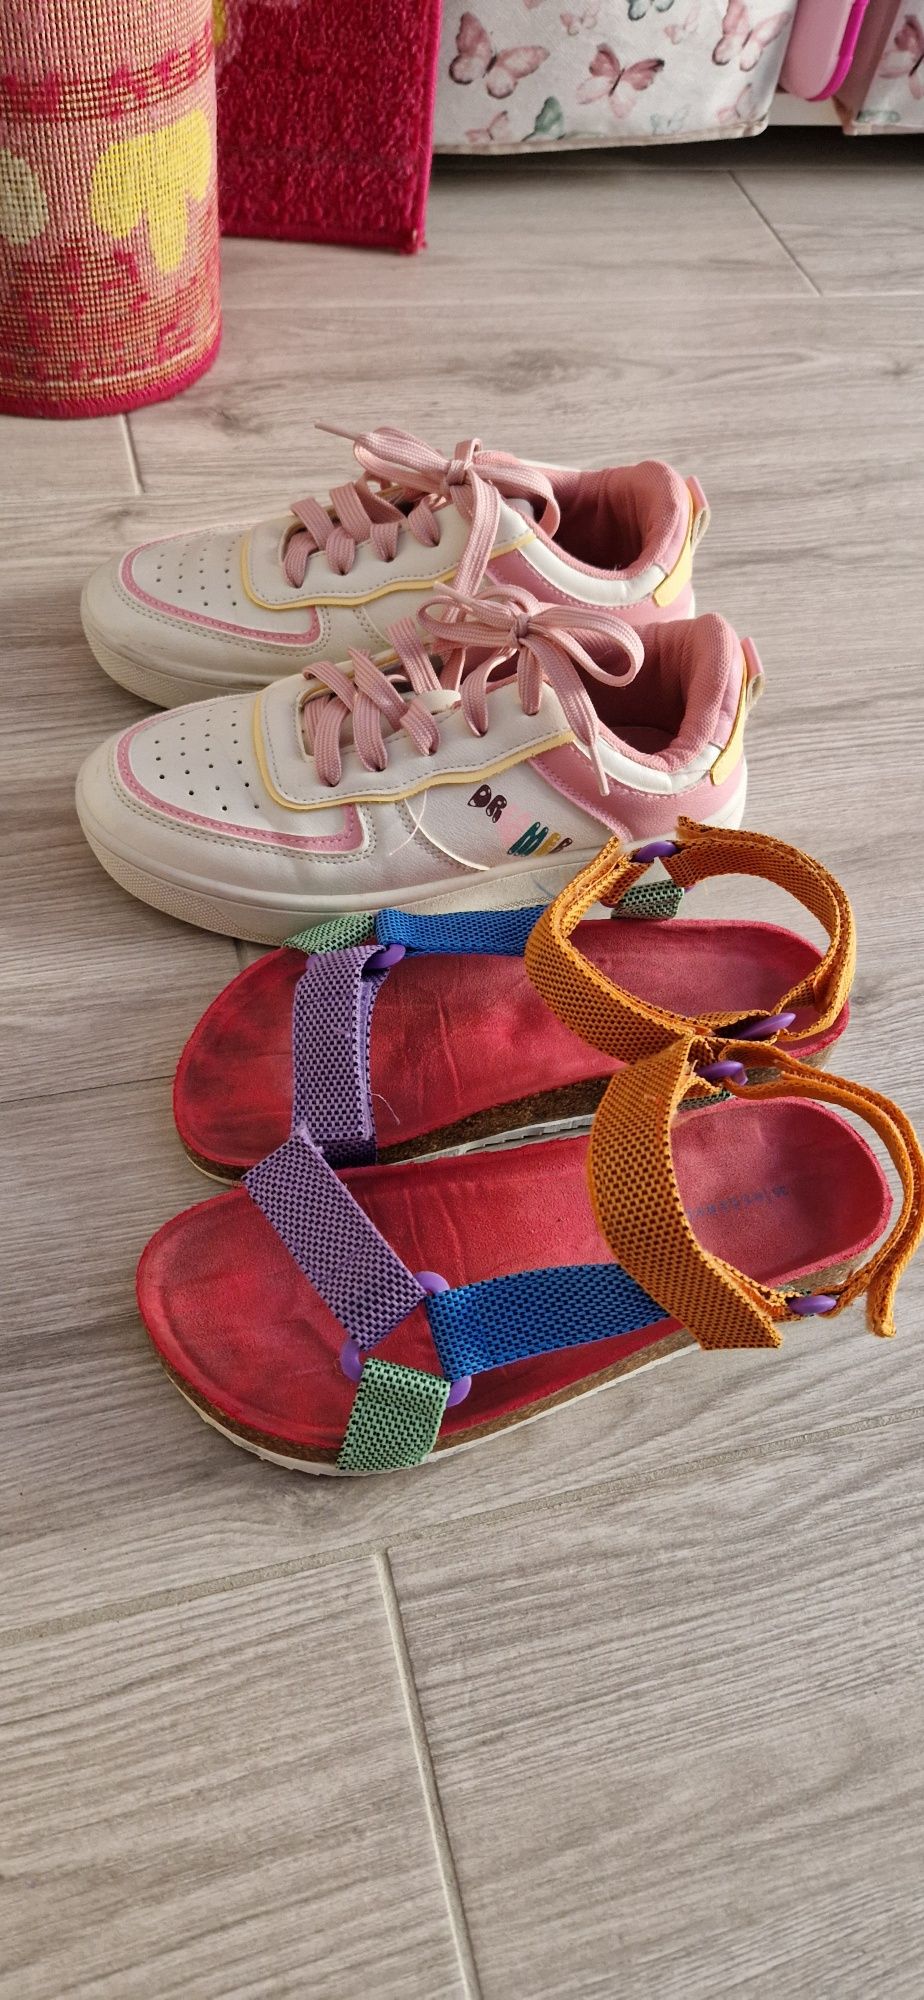 Adidasy i sandałki 36 22 cm